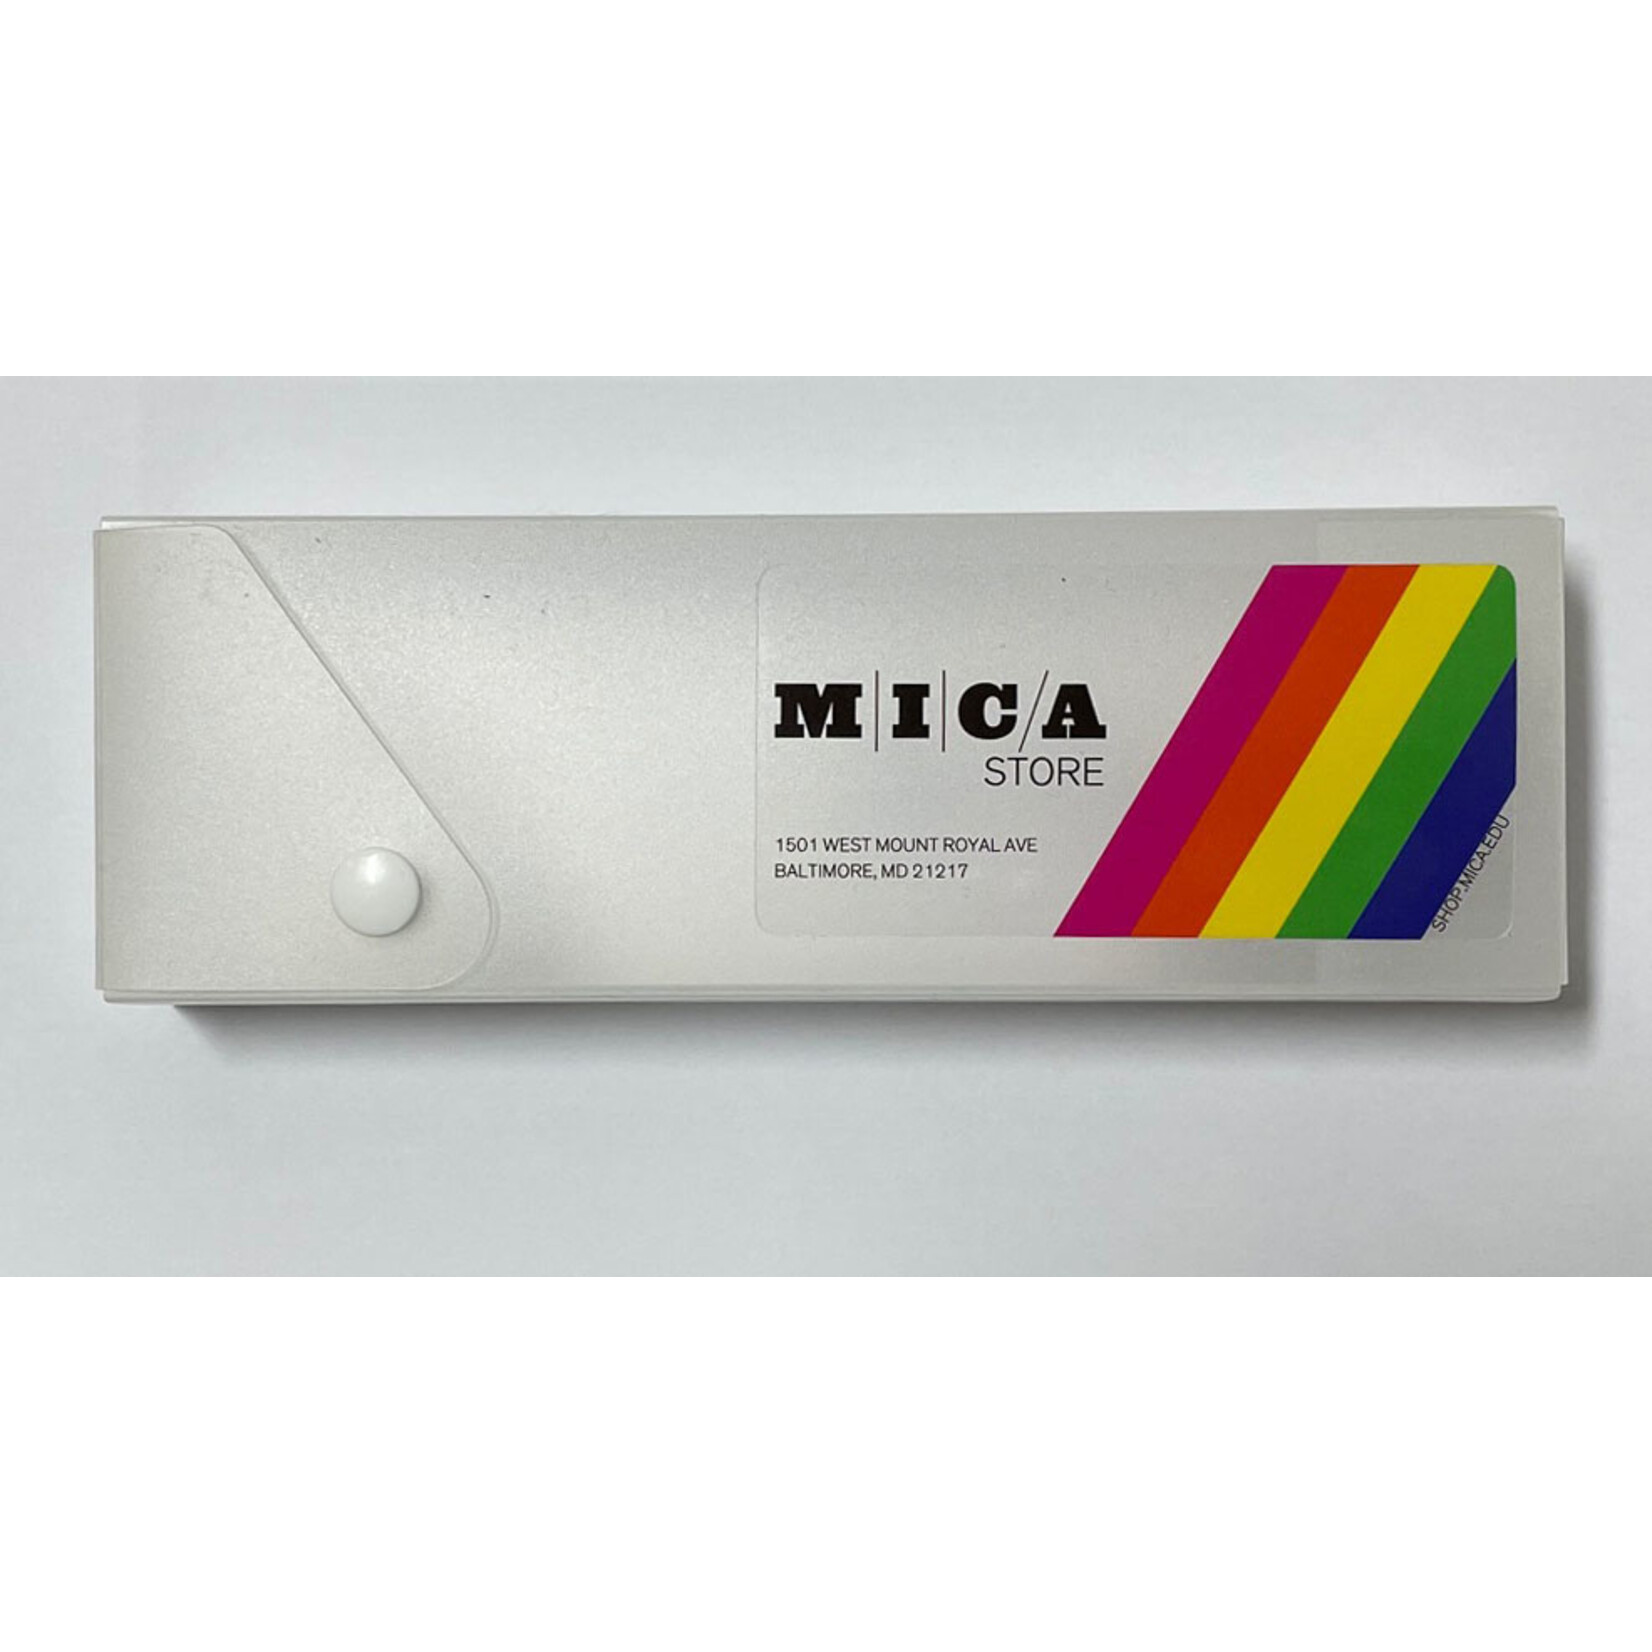 MICA Store Pencil Case Plastic - Store Branded